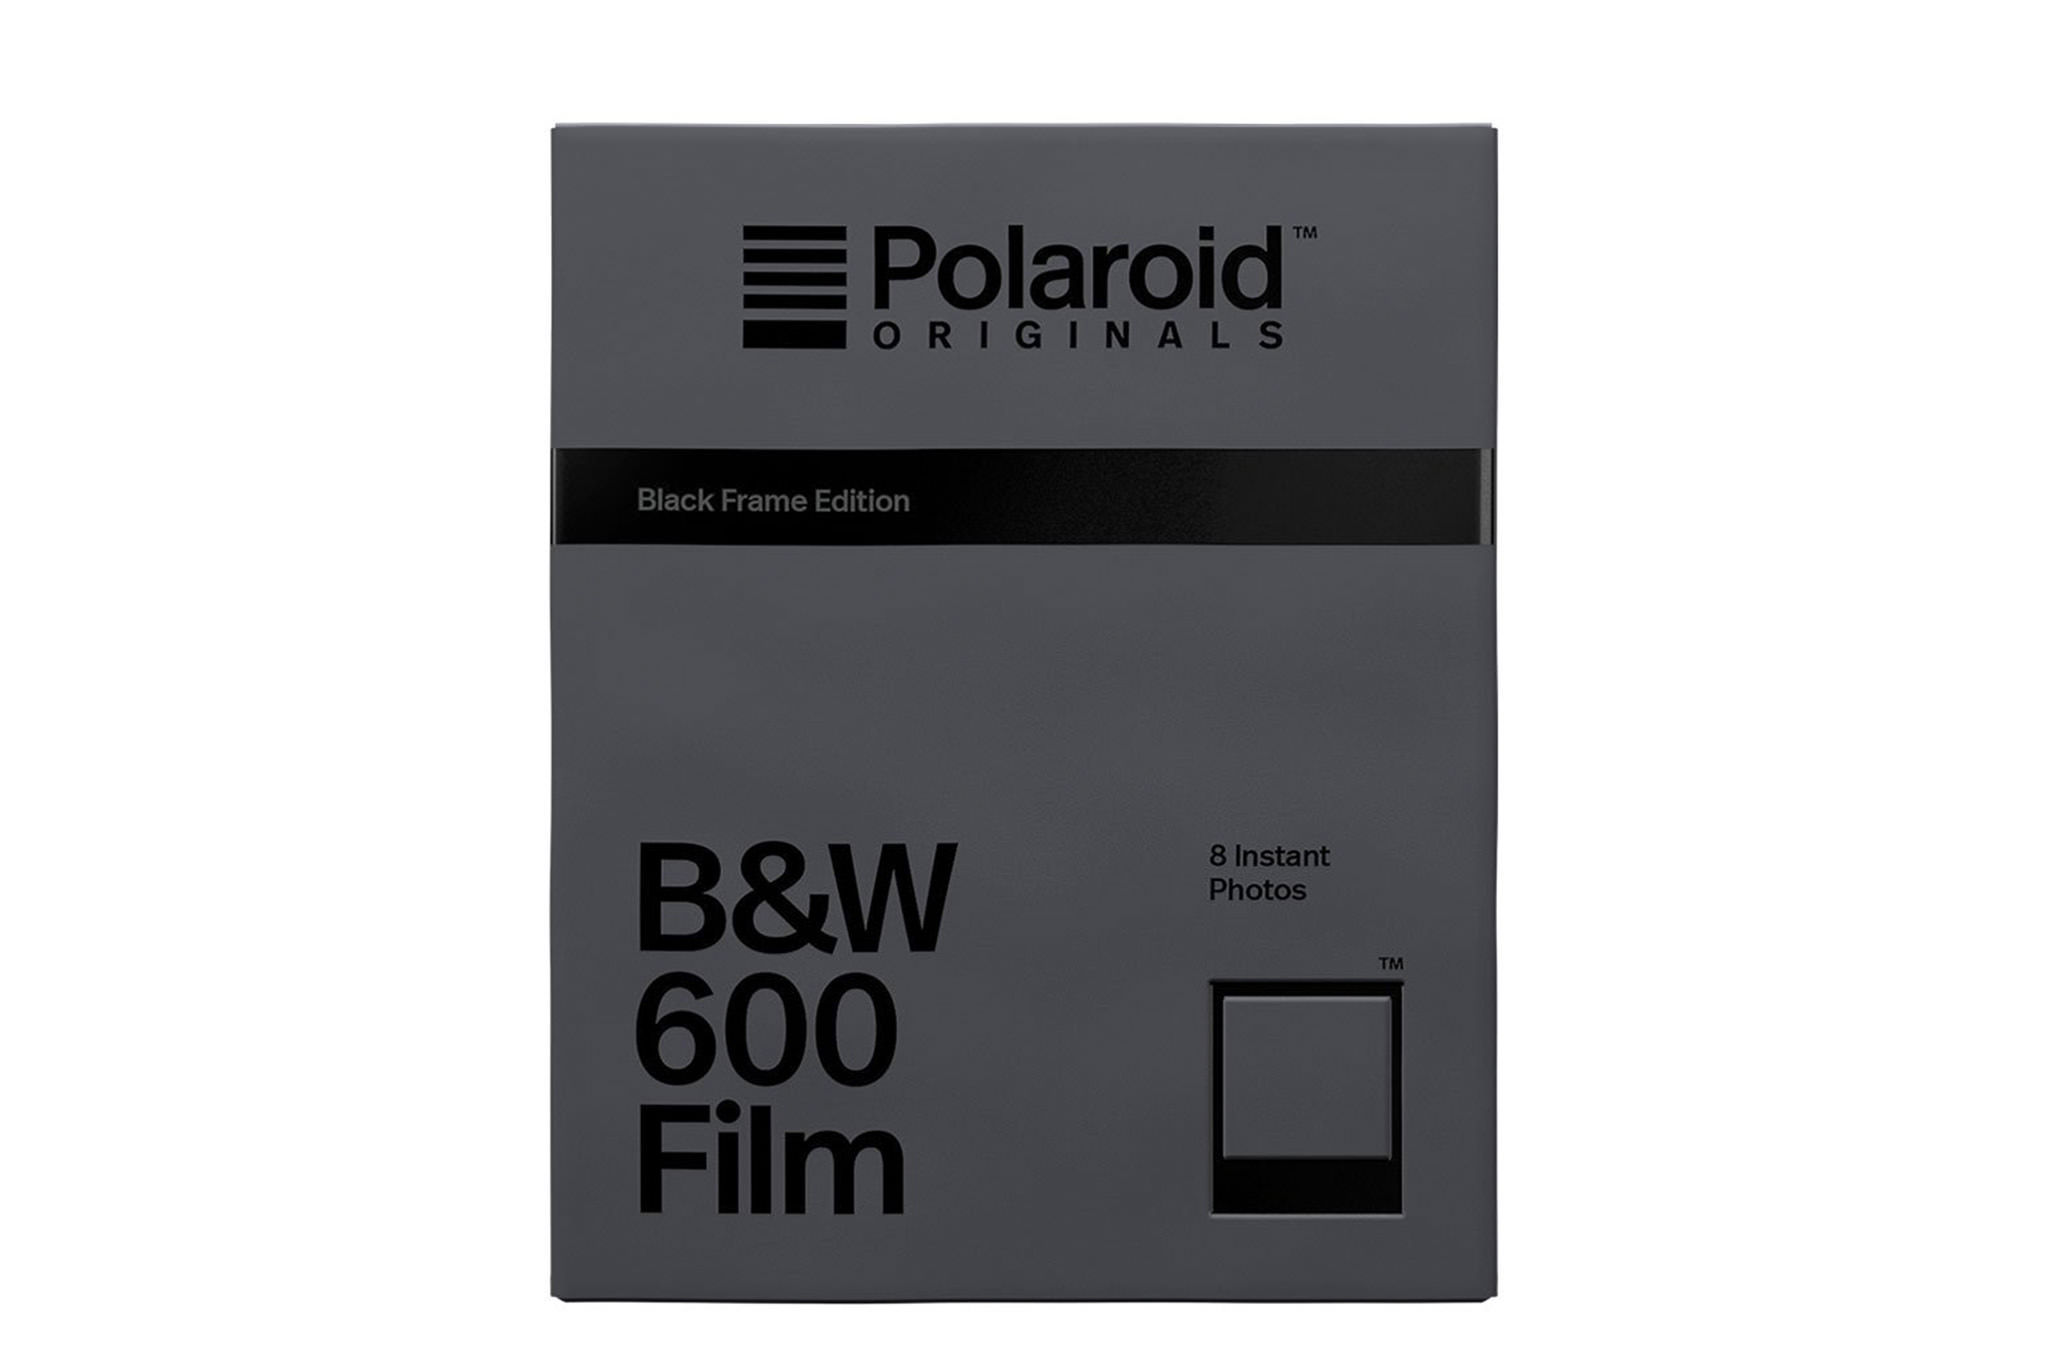 polaroid-originals-bw-film-for-600-black-frame-edition